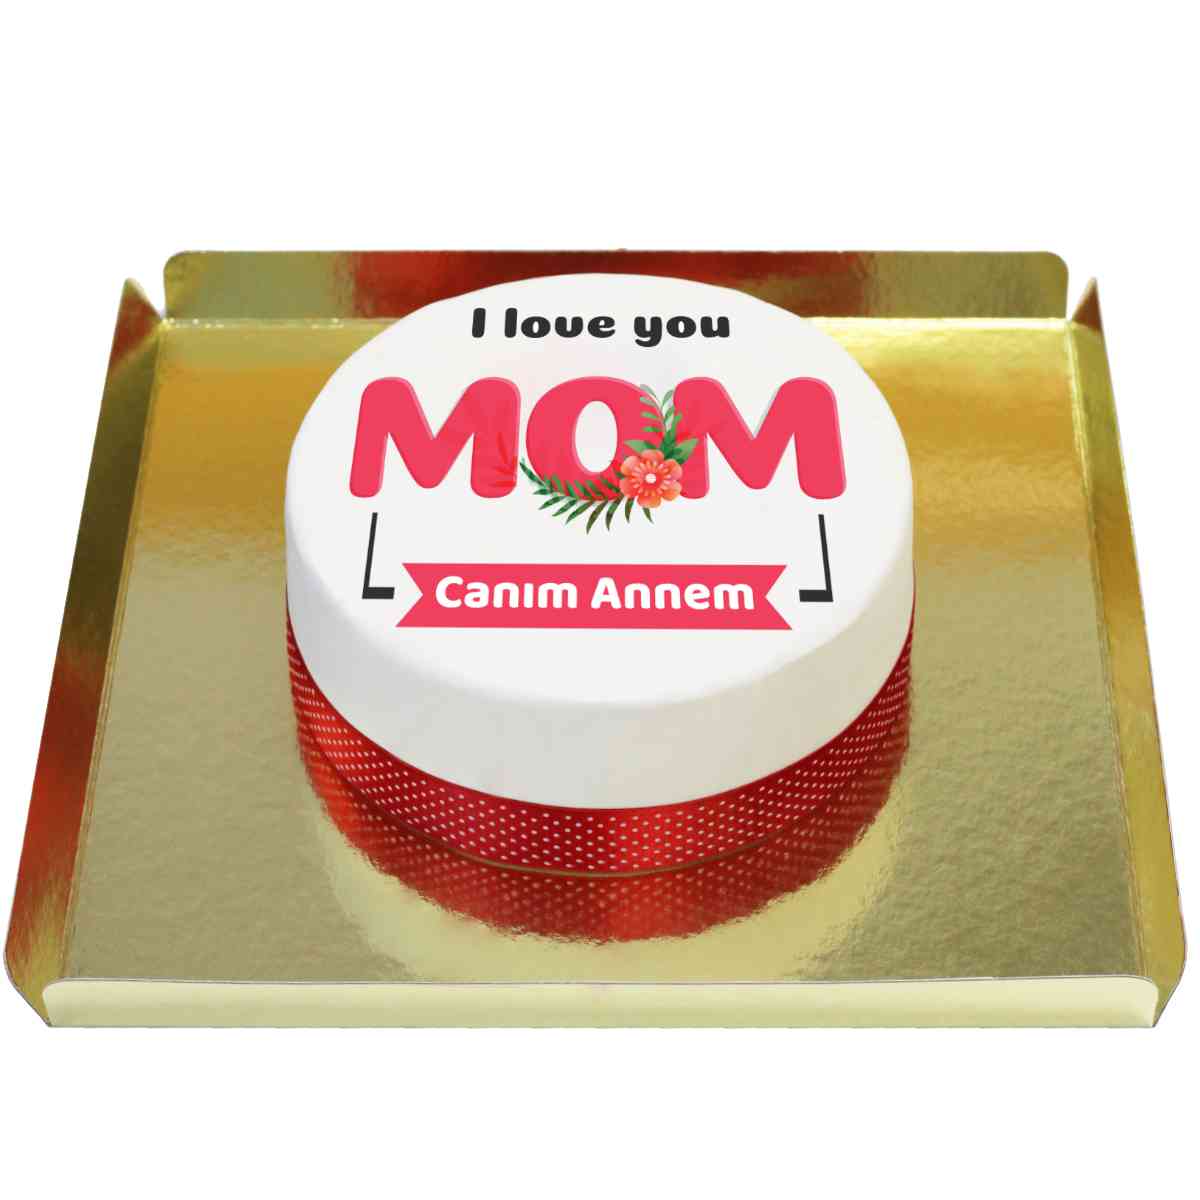 I Love You Mom Cake